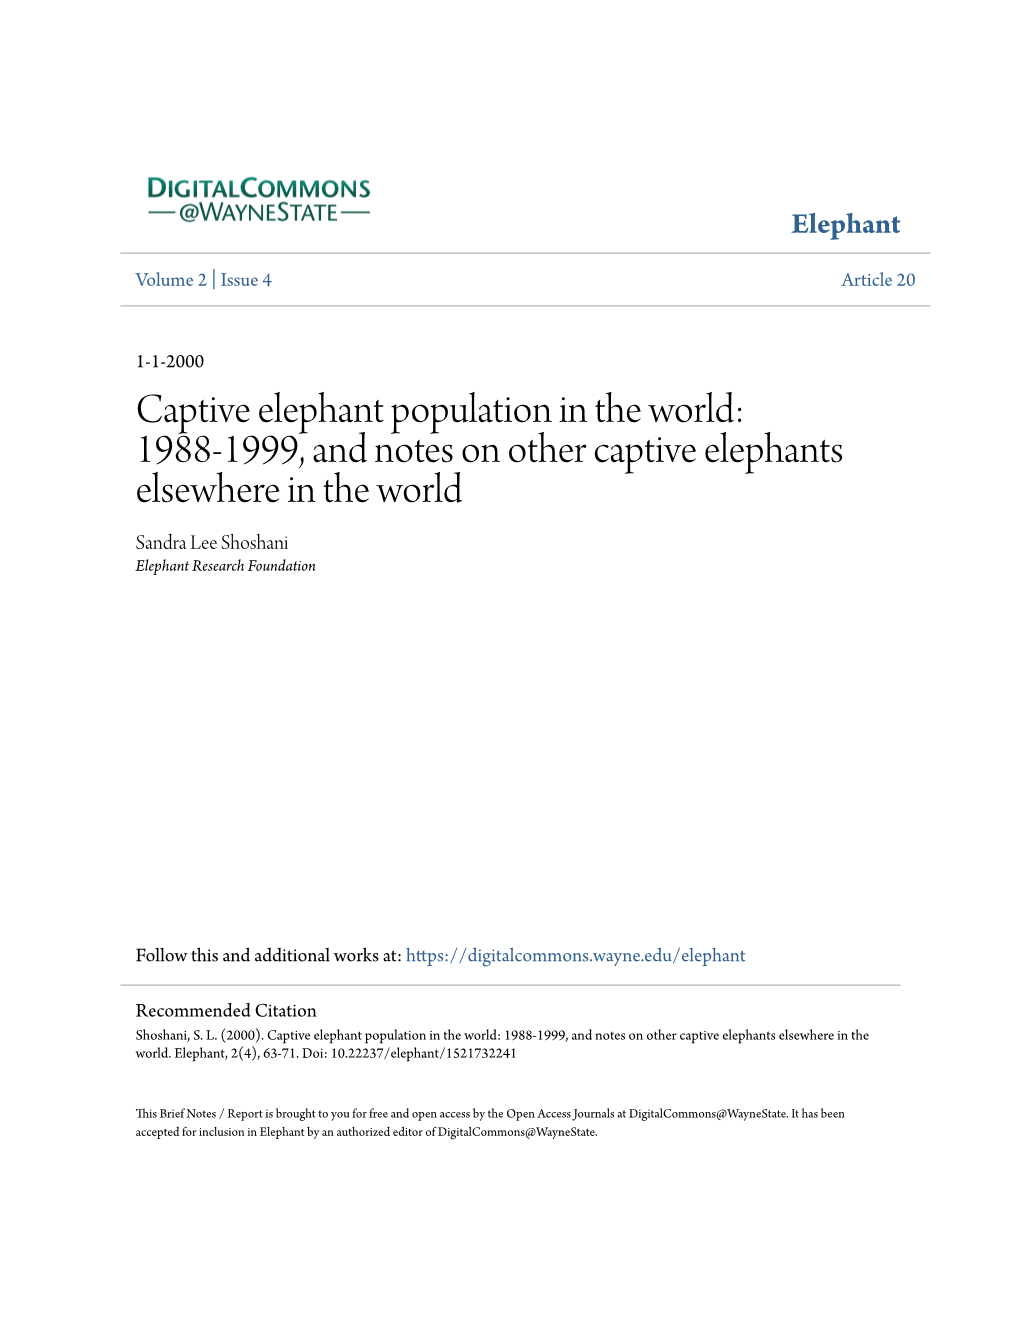 Captive Elephant Population in the World: 1988-1999, and Notes on Other Captive Elephants Elsewhere in the World Sandra Lee Shoshani Elephant Research Foundation